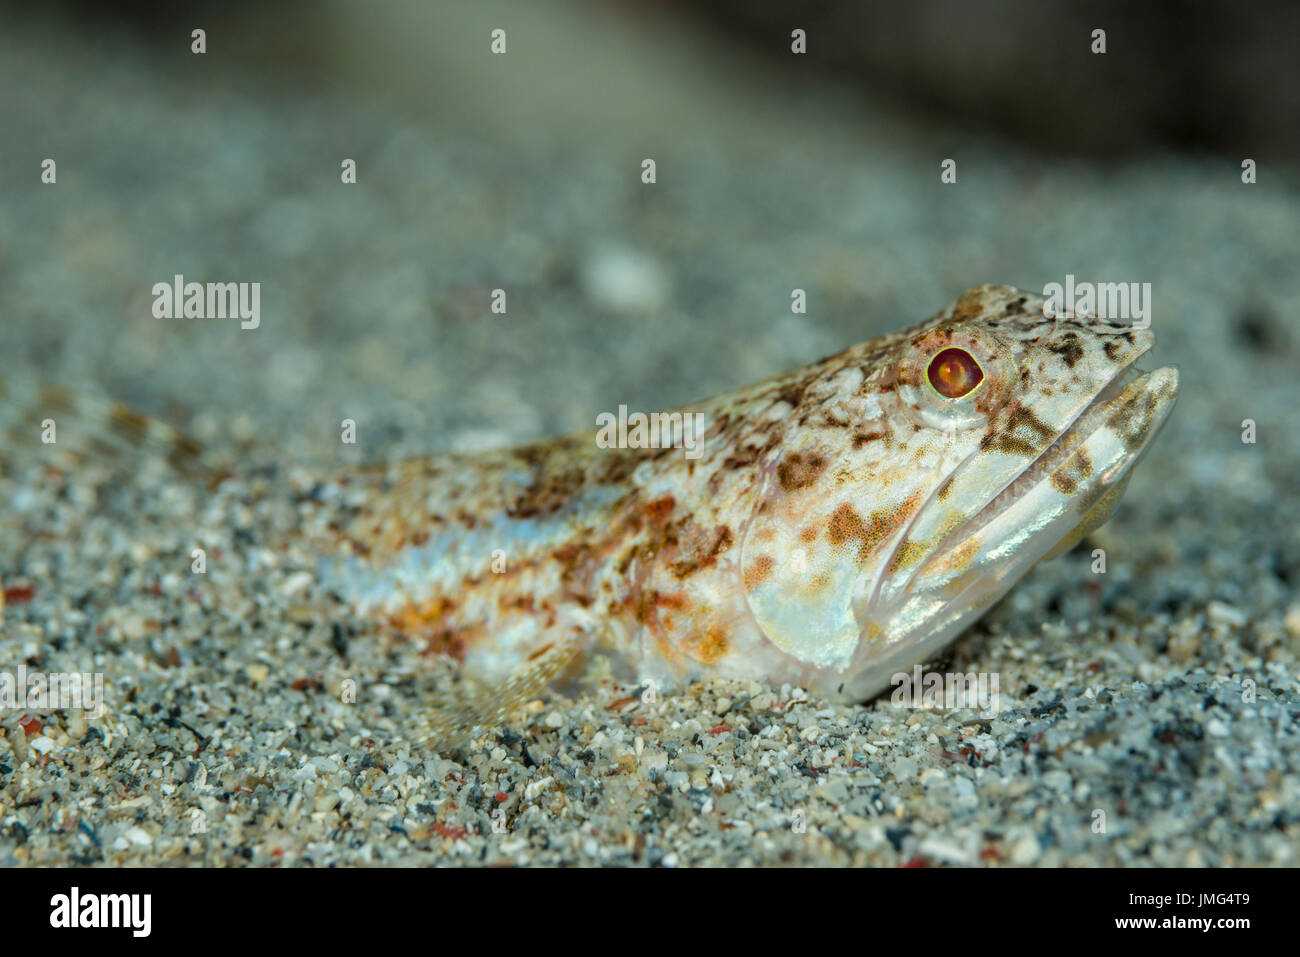 Lizardfish (Synodus dermatogenys) dugged into the sandy ground... Stock Photo